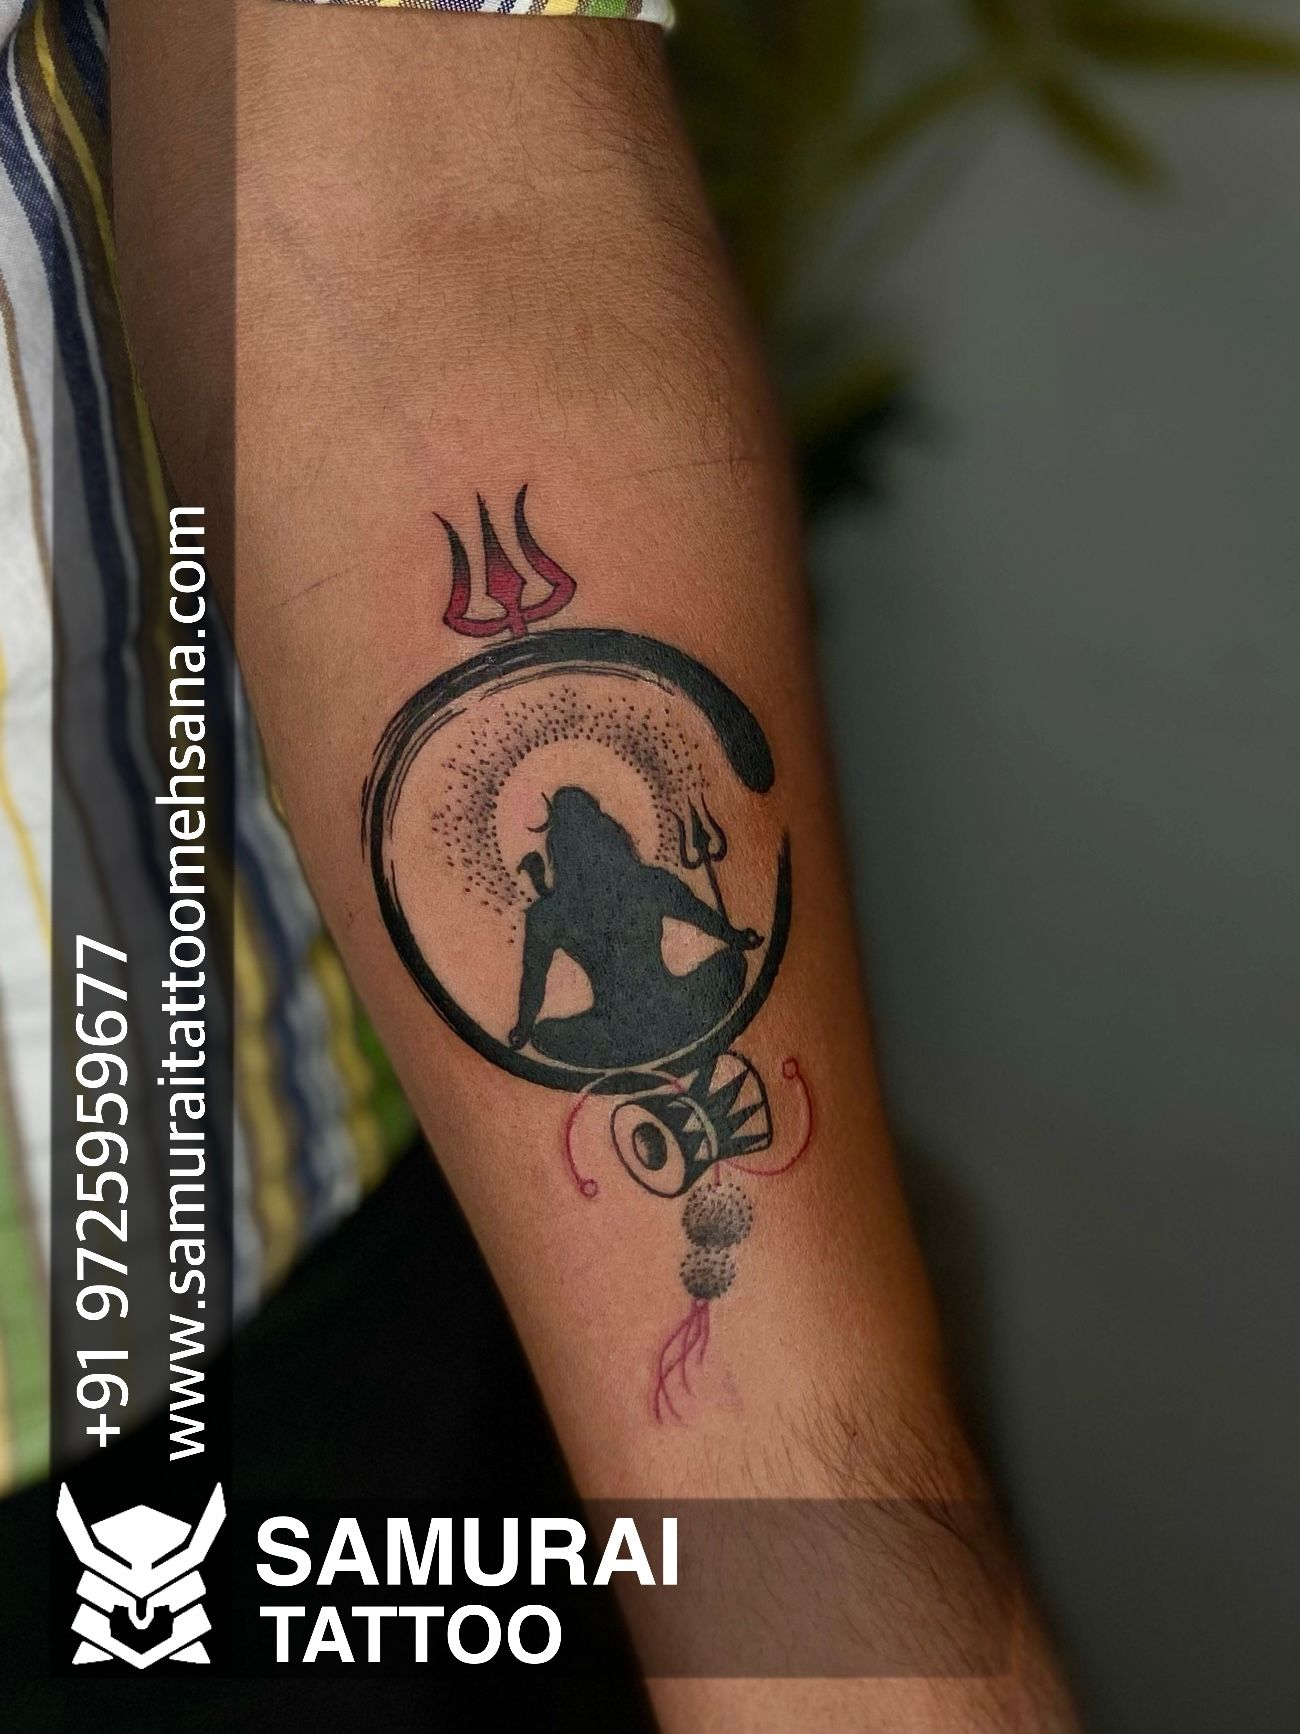 X 上的samurai tattoo mehsana：「Mahadev tattoo |Mahadev tattoo design |Shiva  tattoo |Shivji tattoo |Bholenath tattoo https://t.co/9WUBZD8puN」 / X